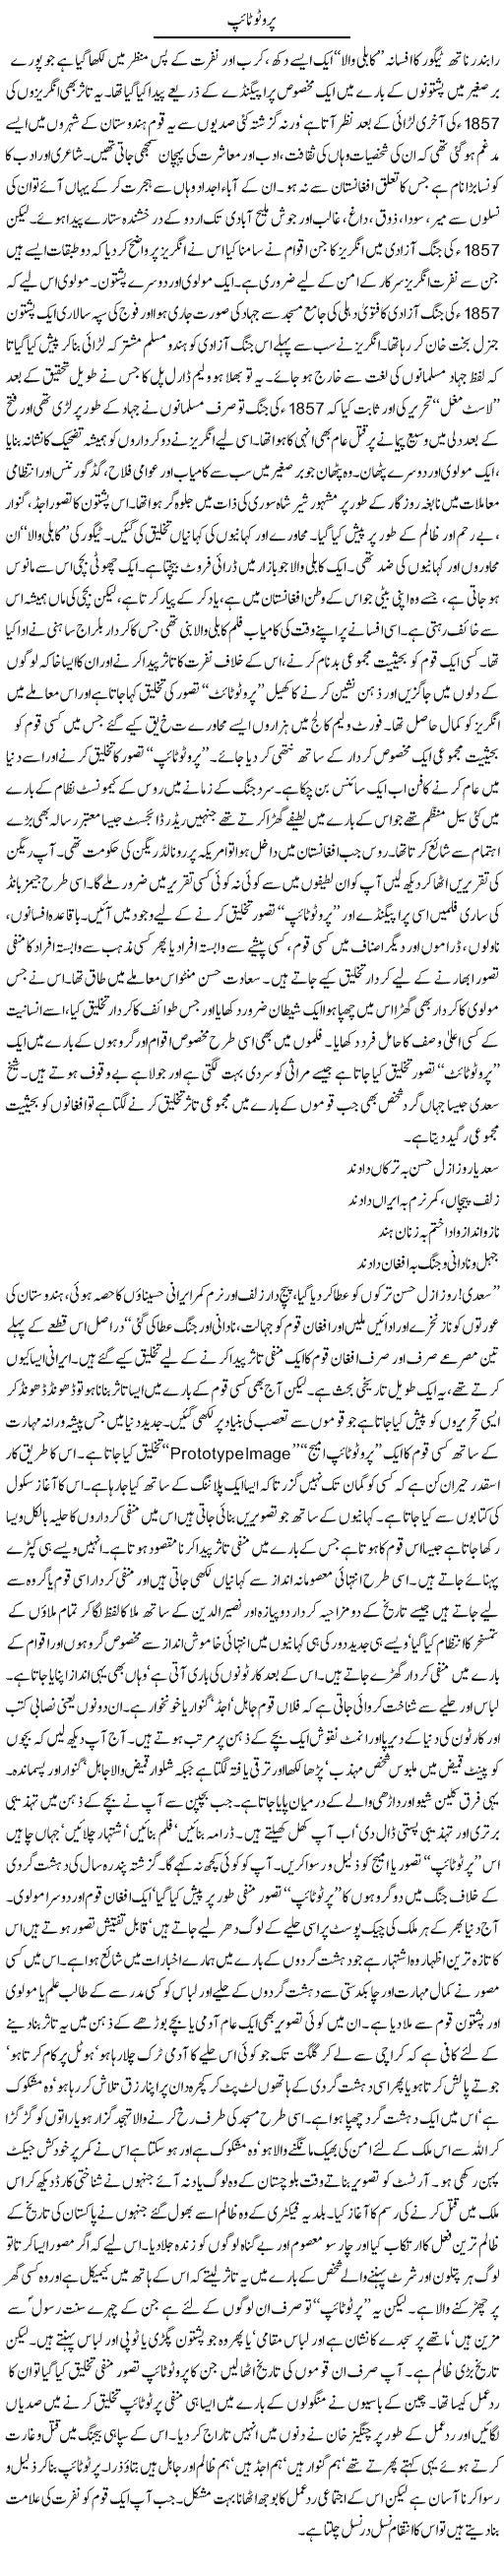 Prototype | Orya Maqbool Jan | Daily Urdu Columns